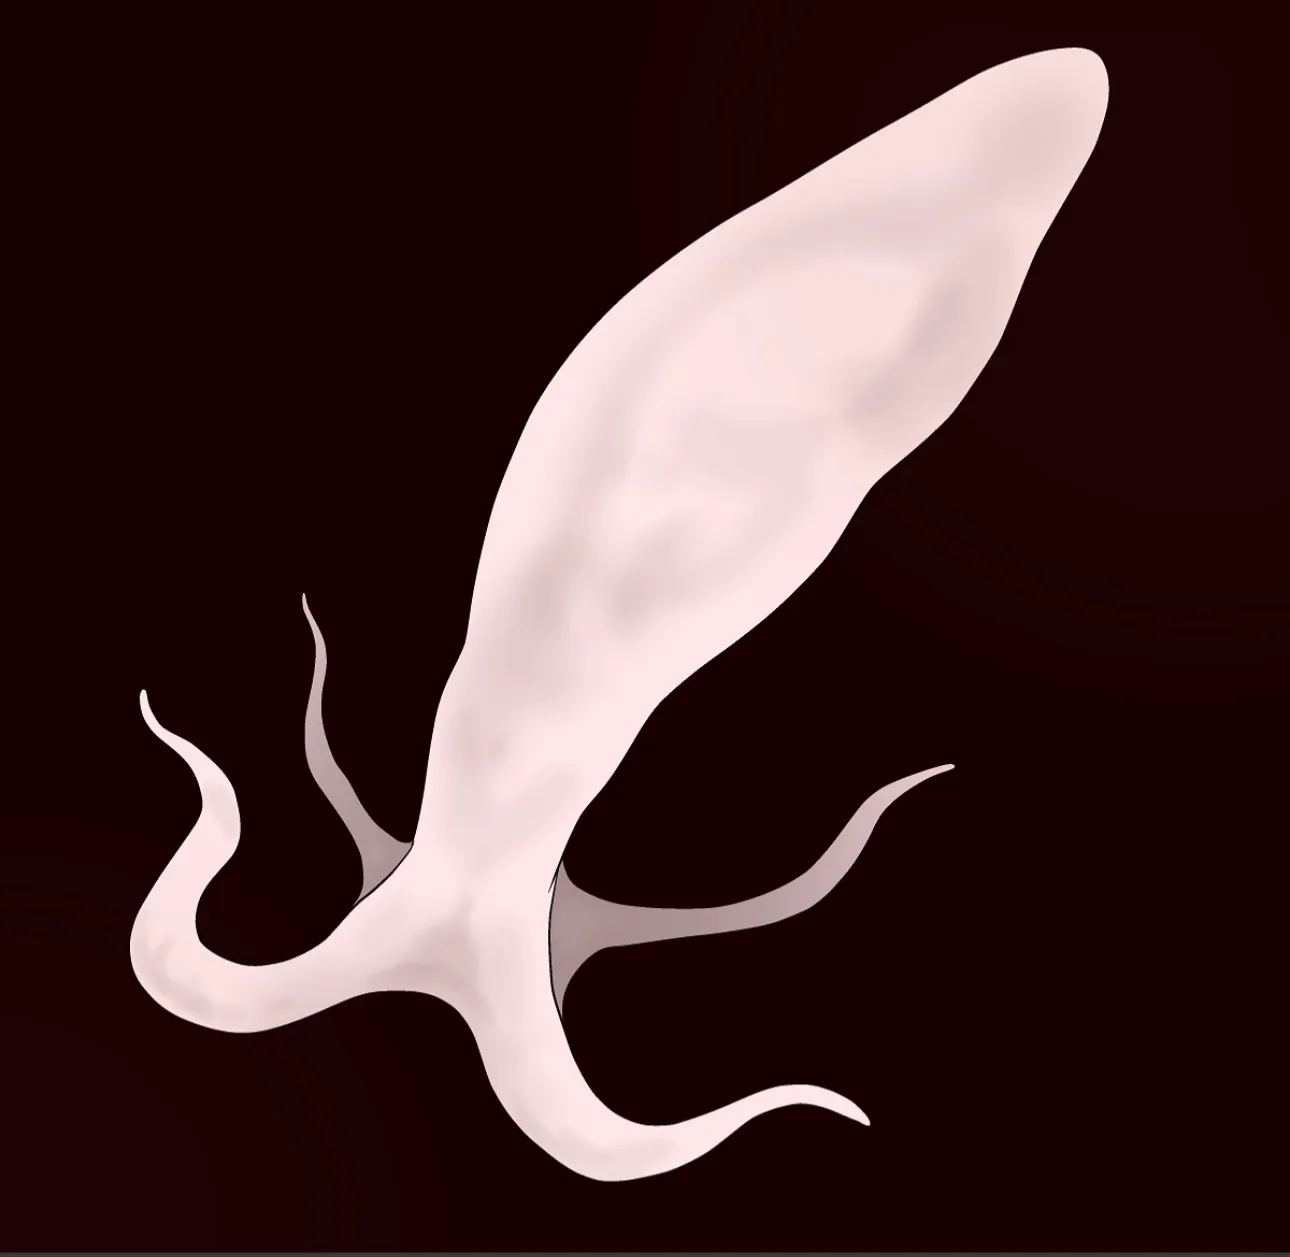 Avatar of Sperm Creature